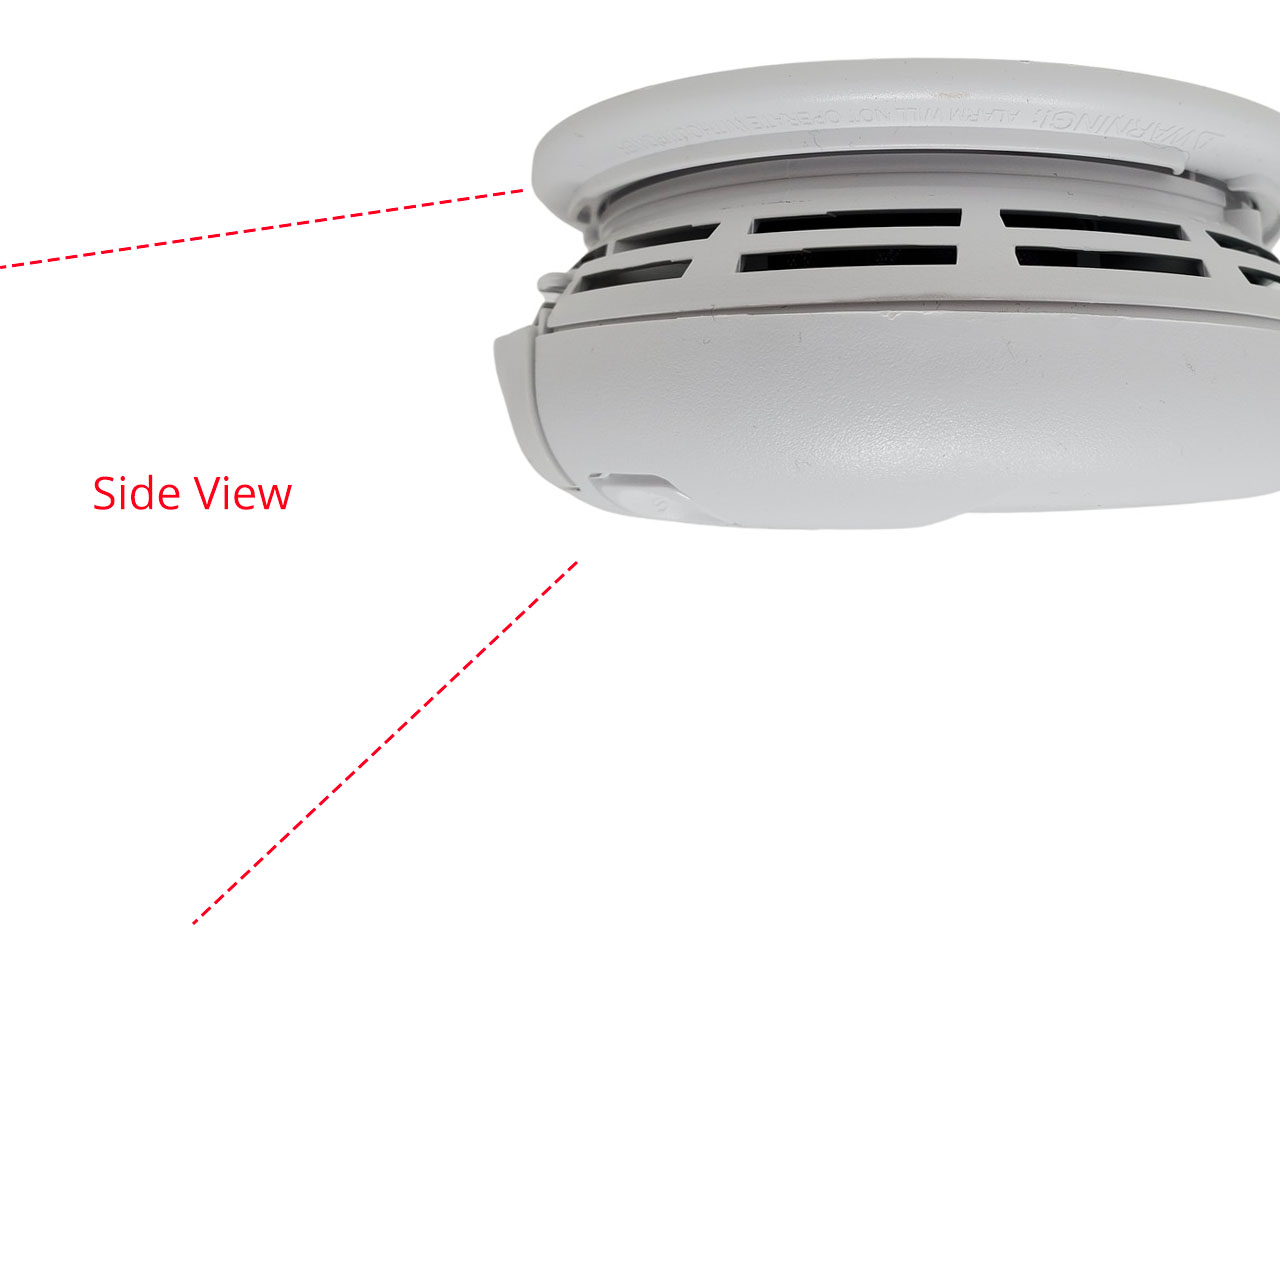 Functional Smoke Detector Hidden 4K Camera w/ DVR & WiFi Remote View (HE-WIFI-SMOKE2-SIDE Hidden Cameras) photo